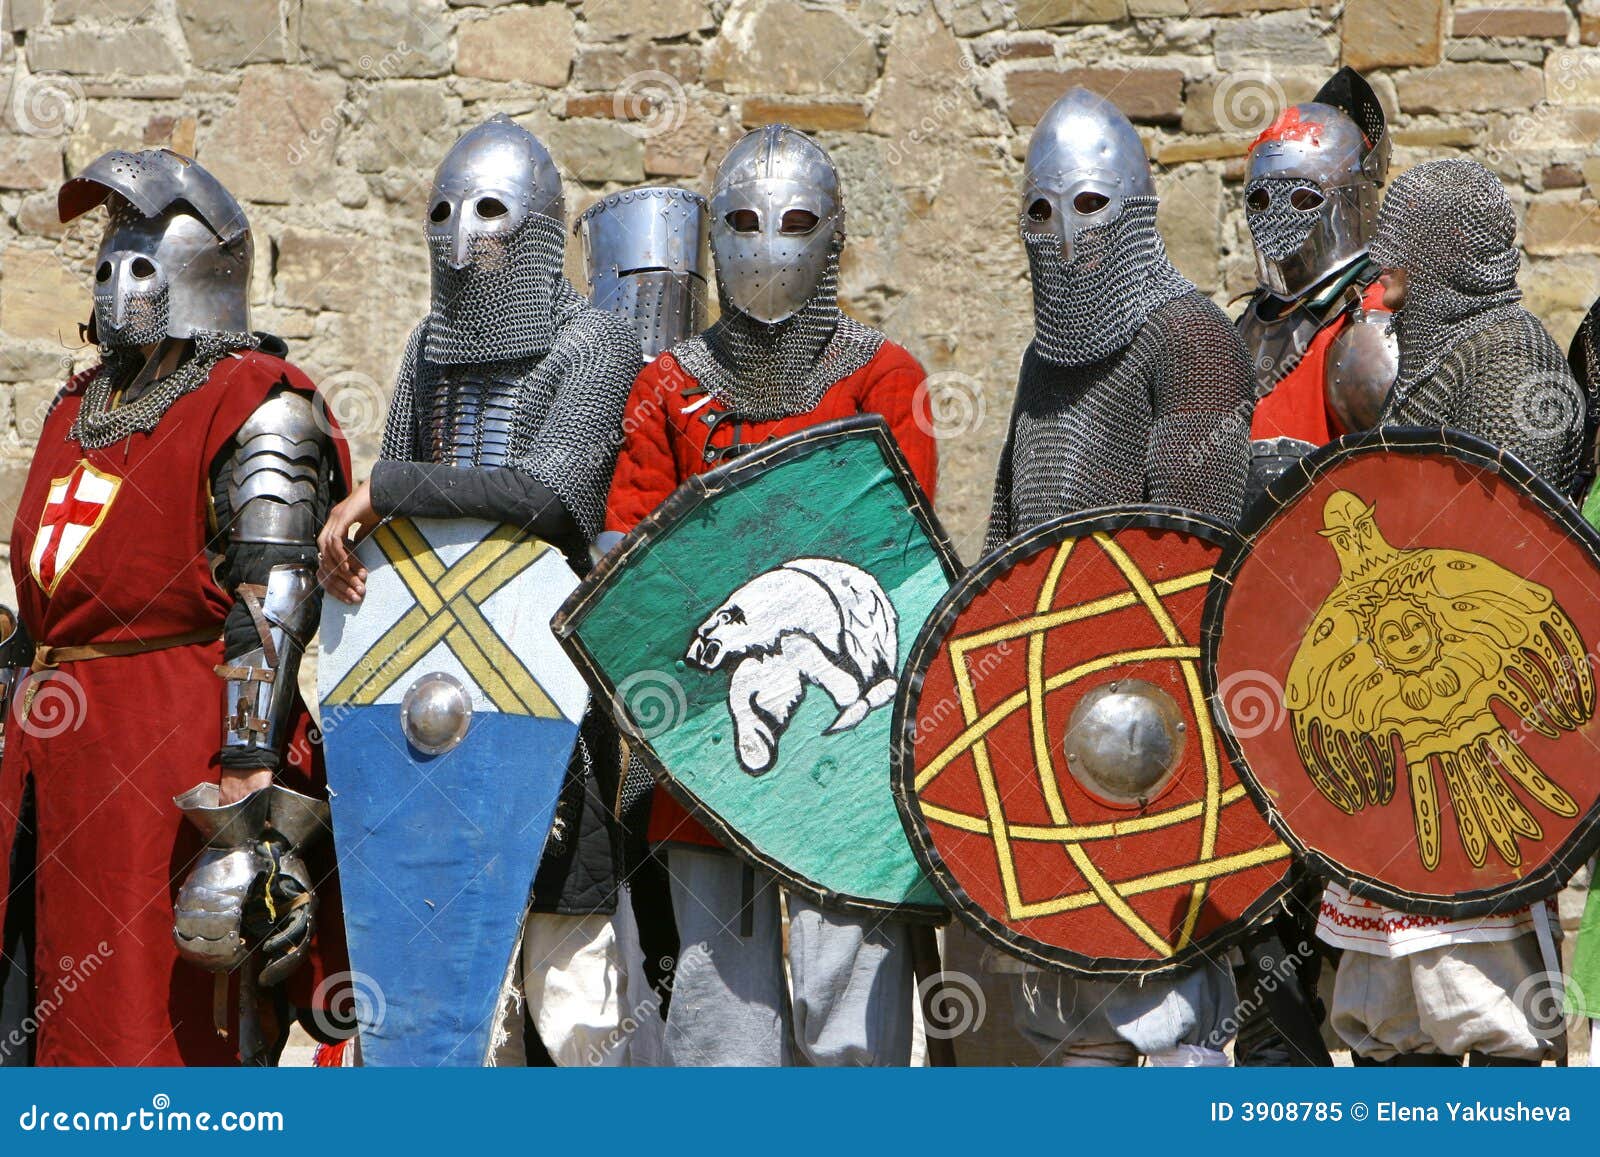 several knights